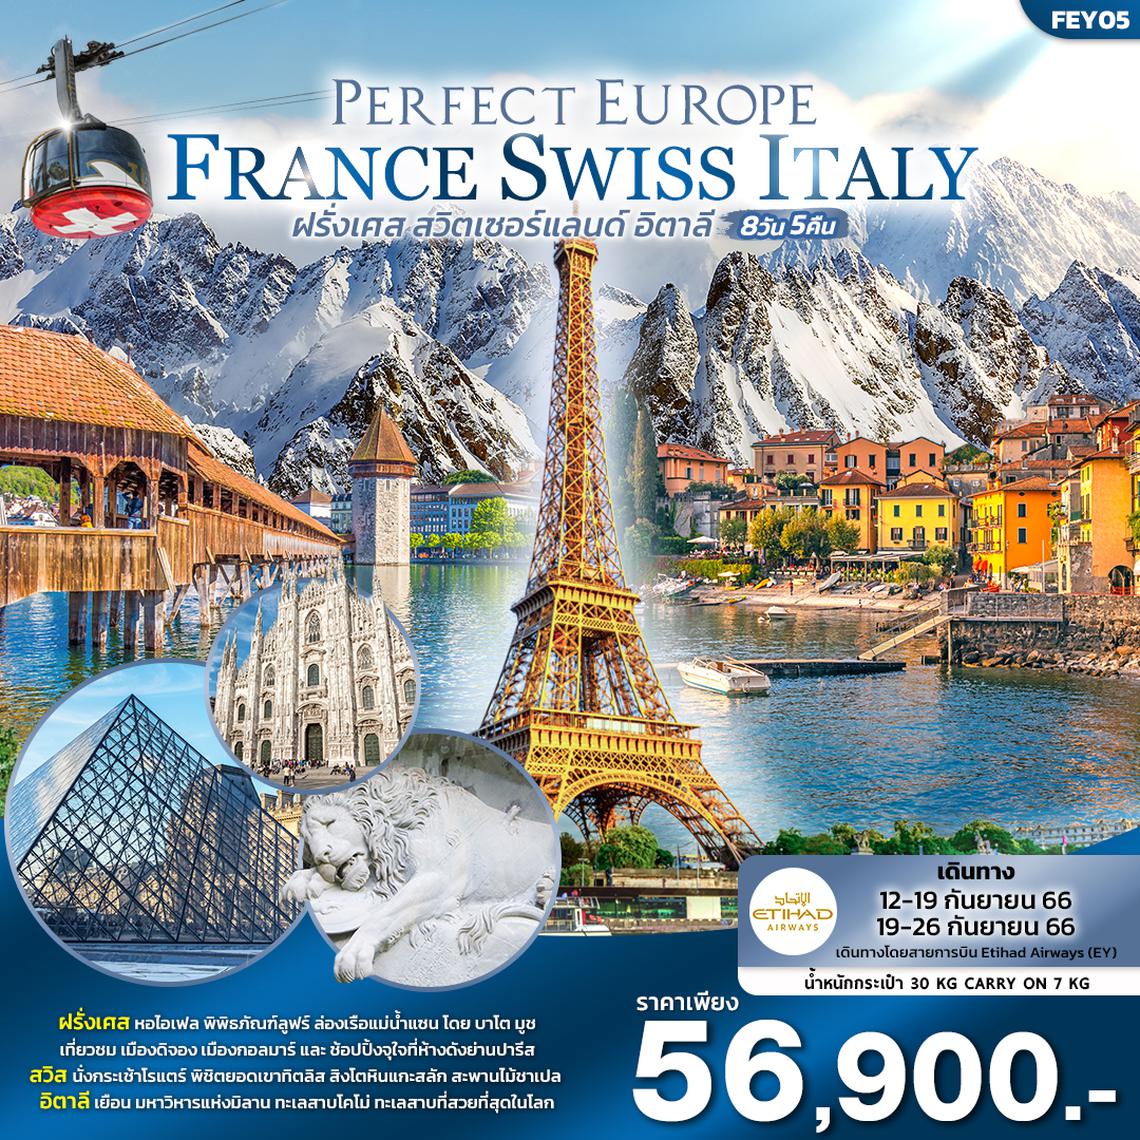 PERFECT EUROPE ฝรั่งเศส สวิตเซอร์แลนด์ อิตาลี 8วัน 5คืน โดยสายการบิน Etihad Airways (EY)